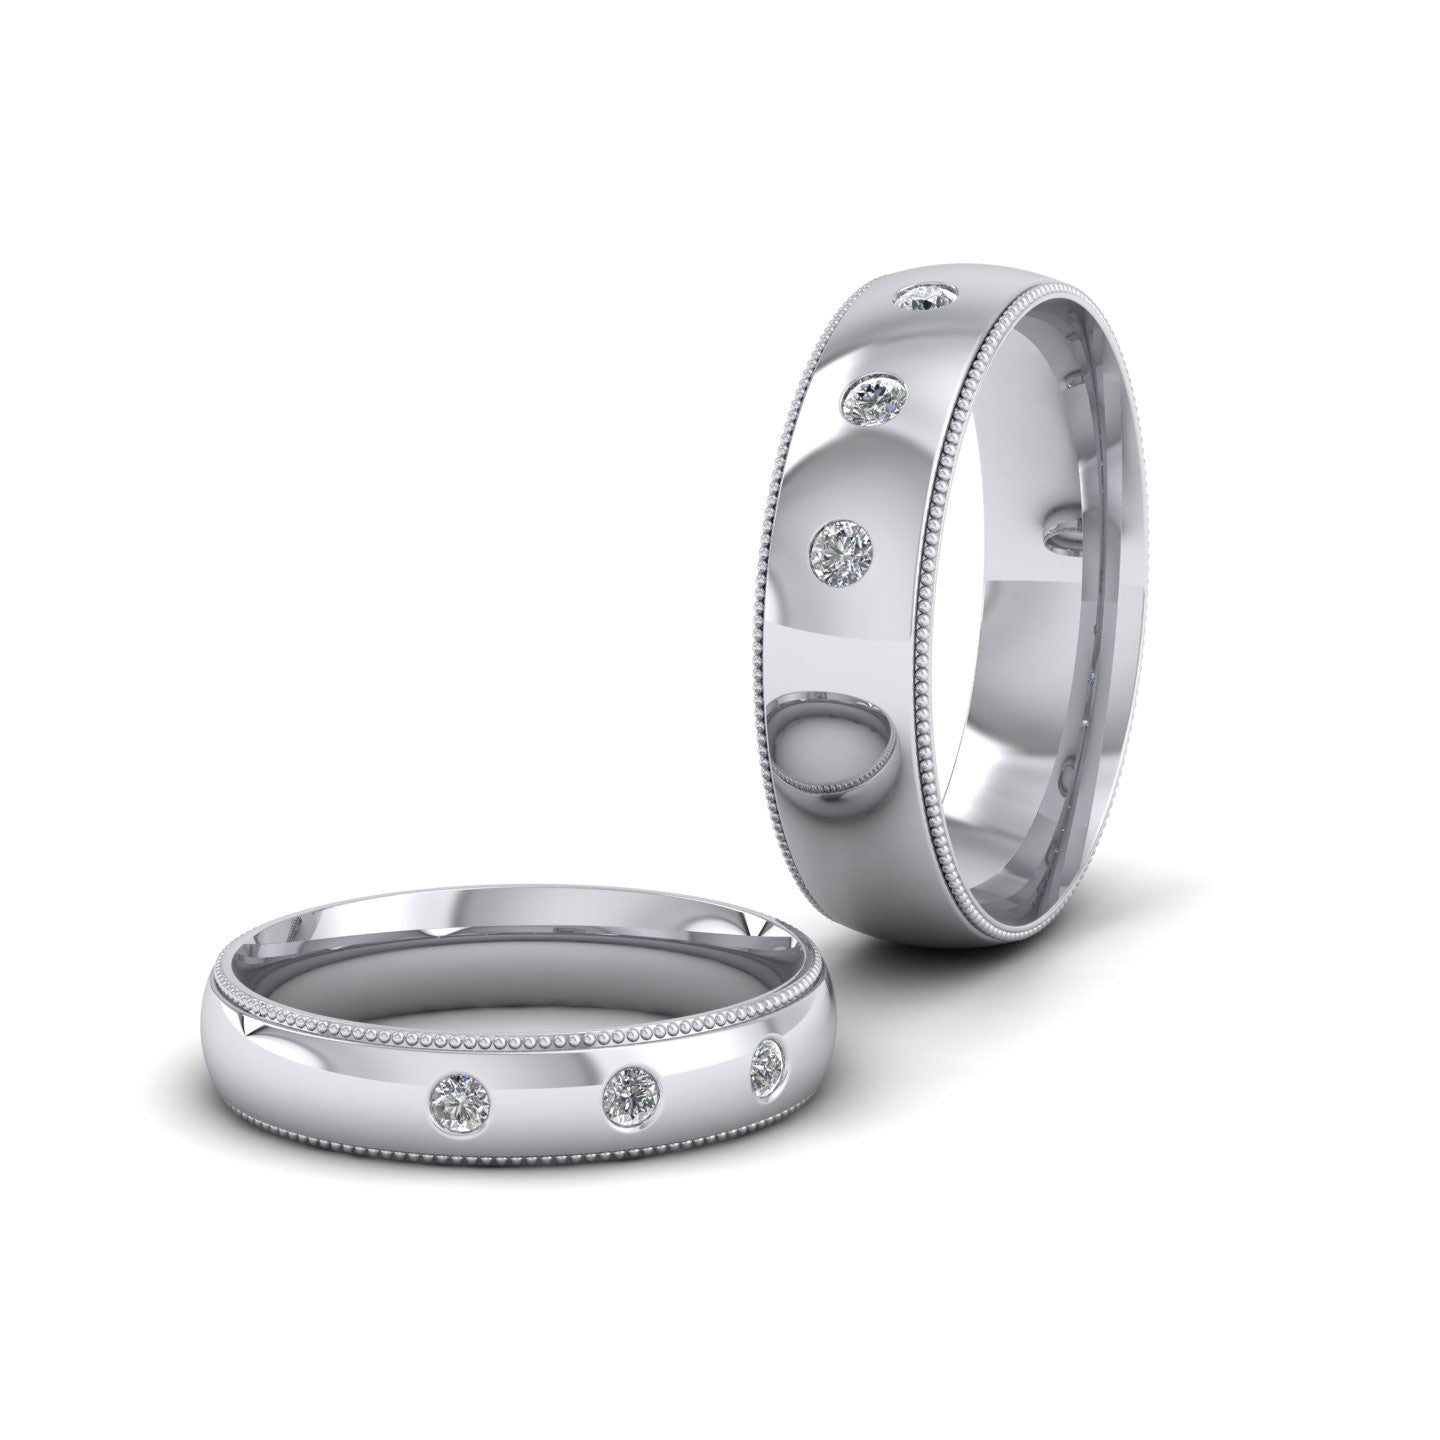 3mm Double Comfort Ring with Ten Princess Cut Diamonds